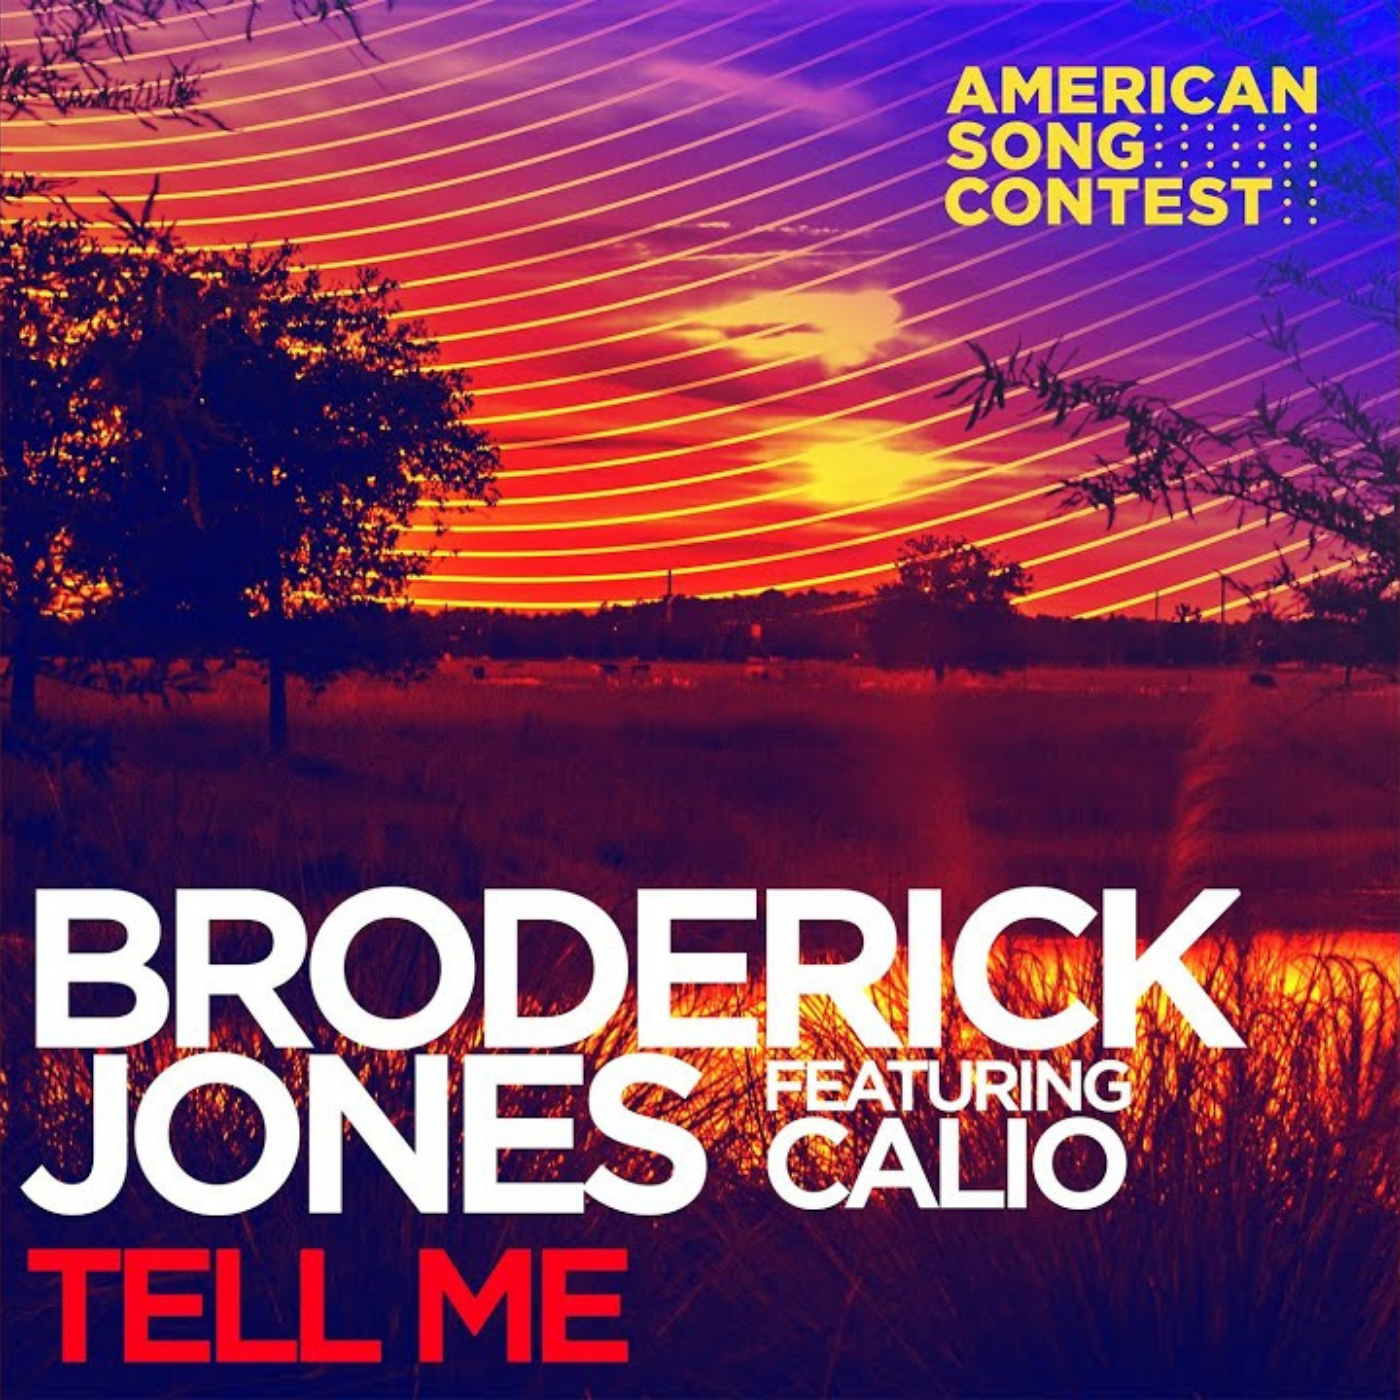 Broderick Jones ft. featuring Calio Tell Me cover artwork